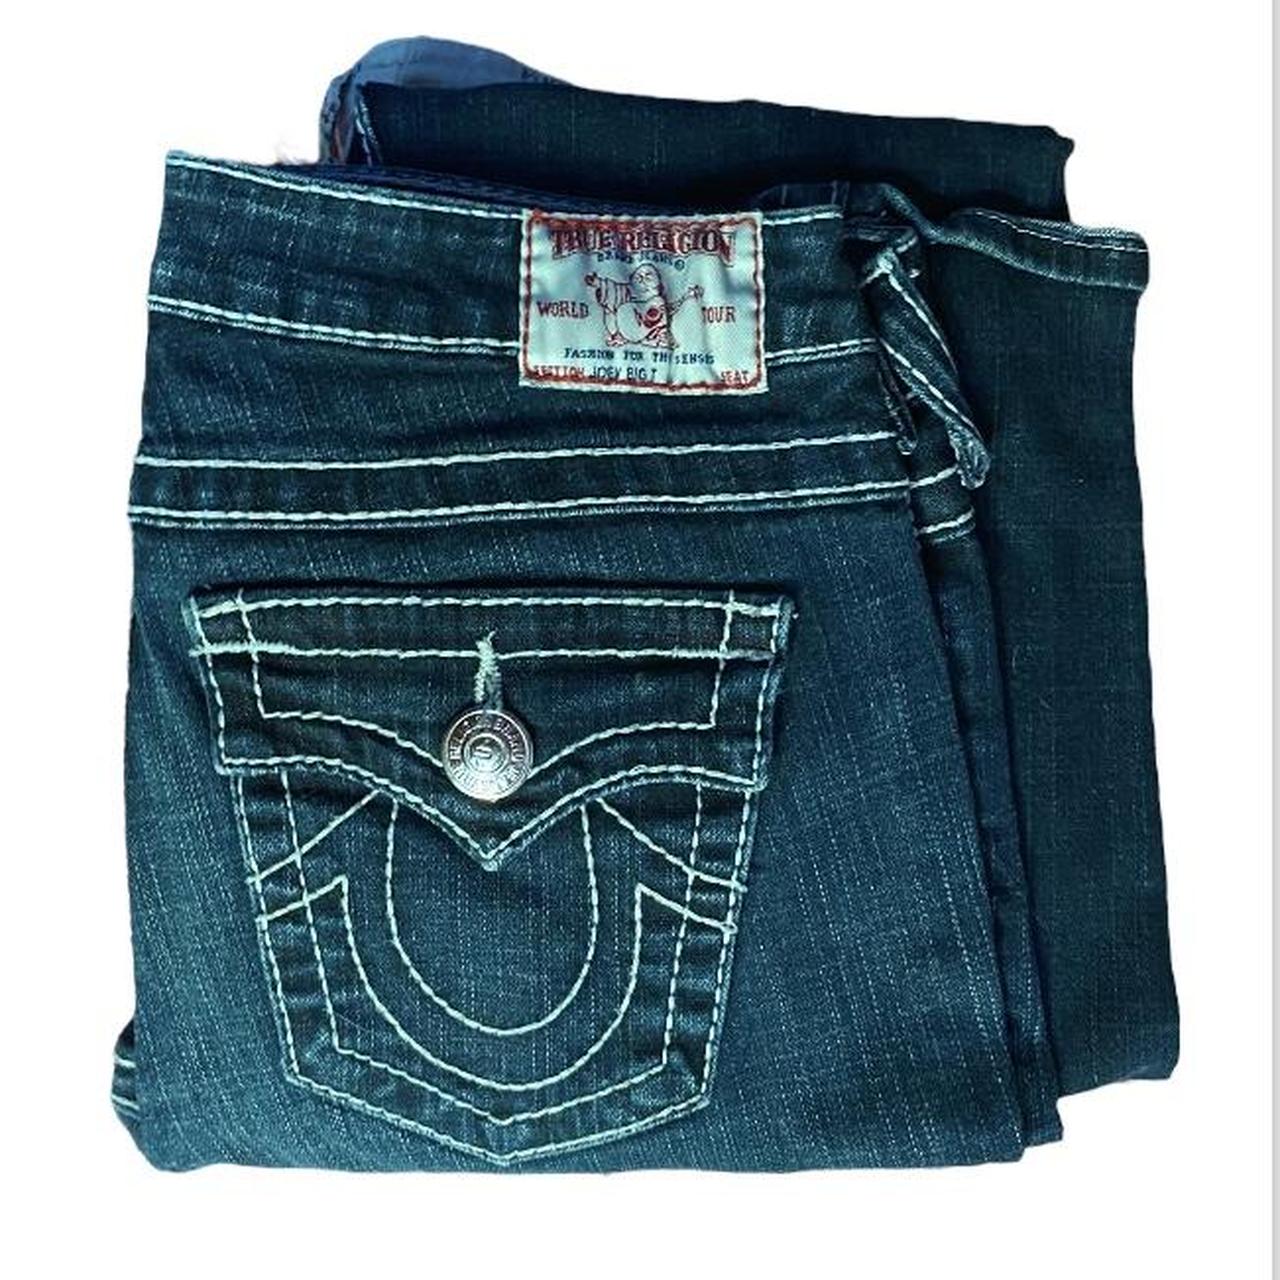 True religion Joey jeans size 29! Low waisted skinny... - Depop